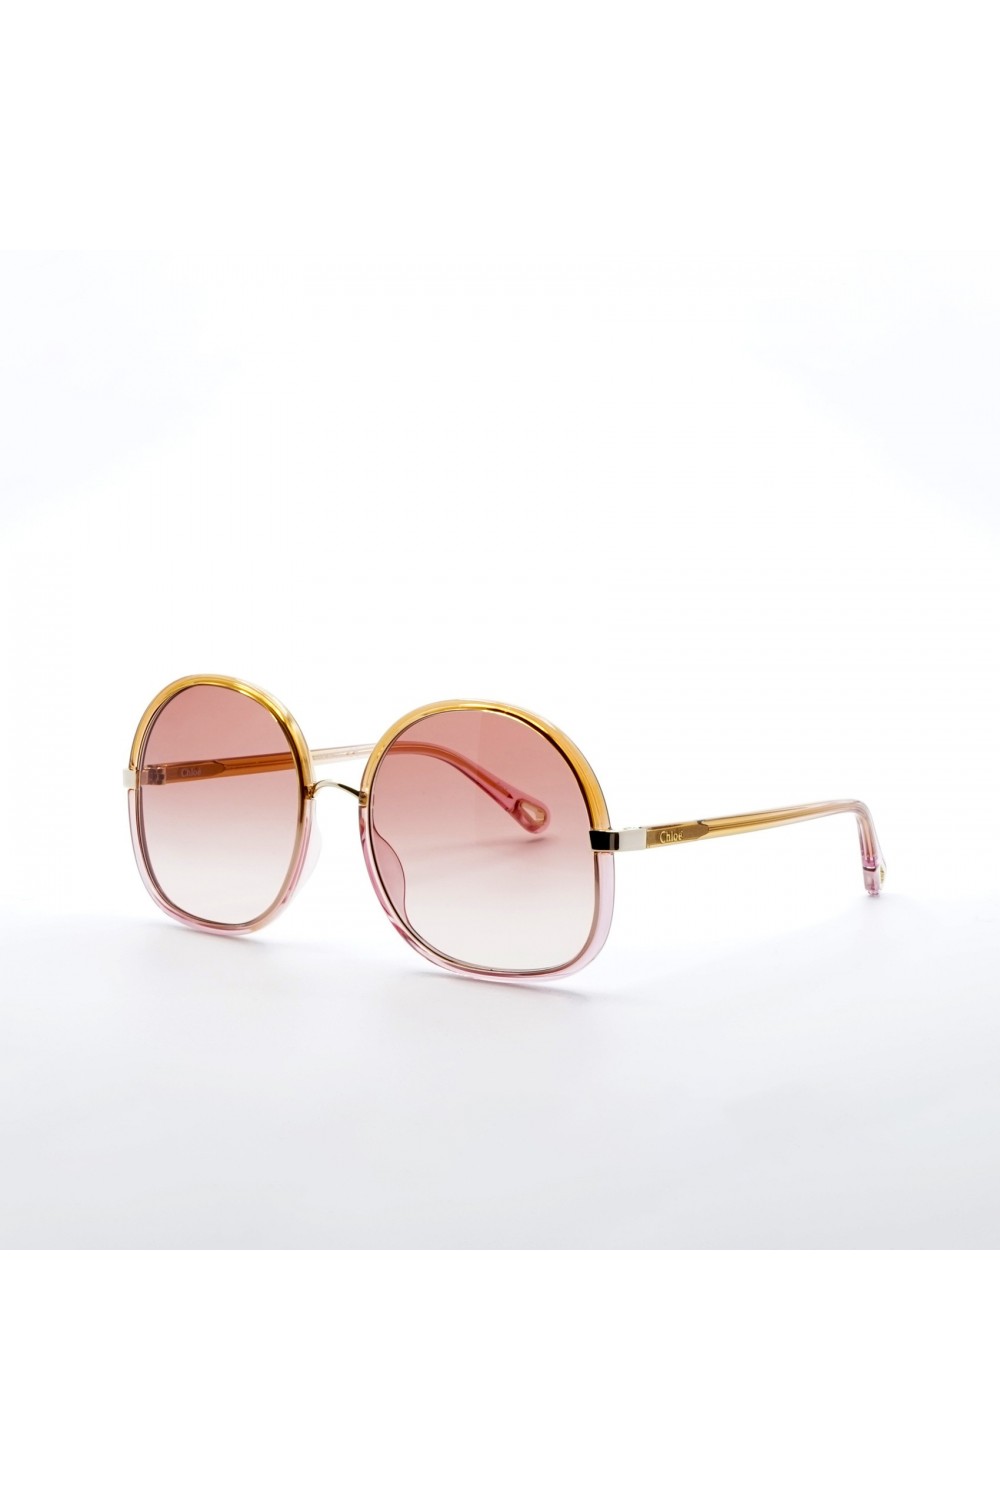 Chloè - Occhiali da sole in celluloide tondi per donna rosa - CH0029S 002